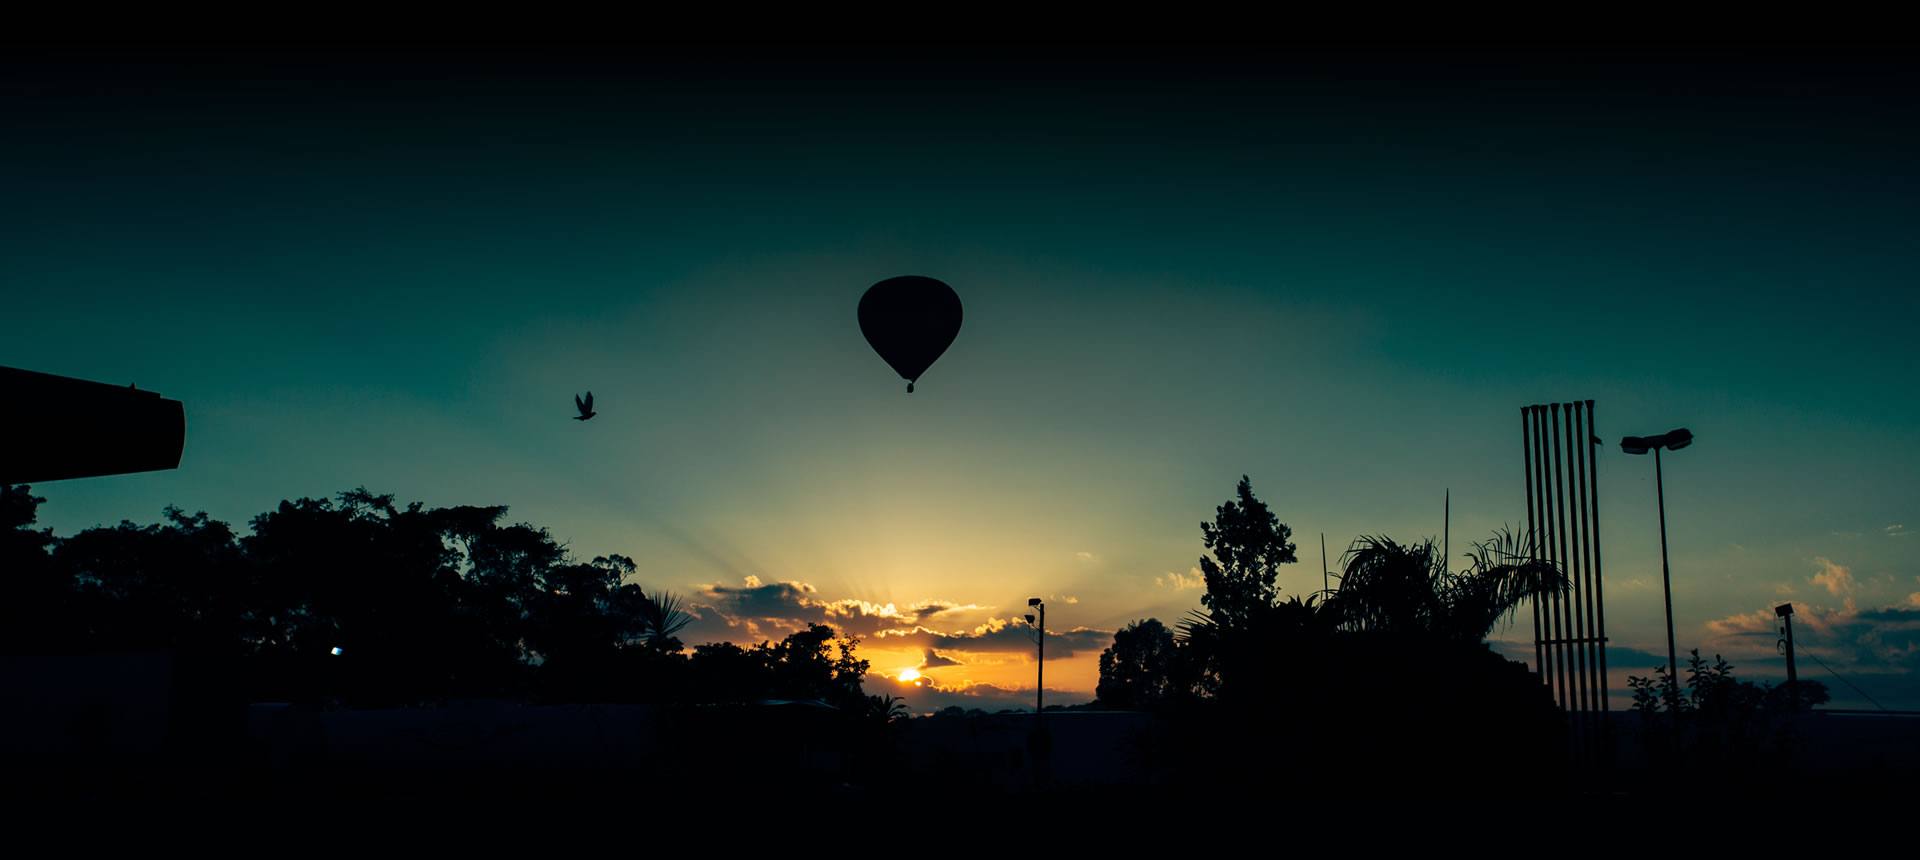 Shutterbug - Hot Air Balloon Sunset